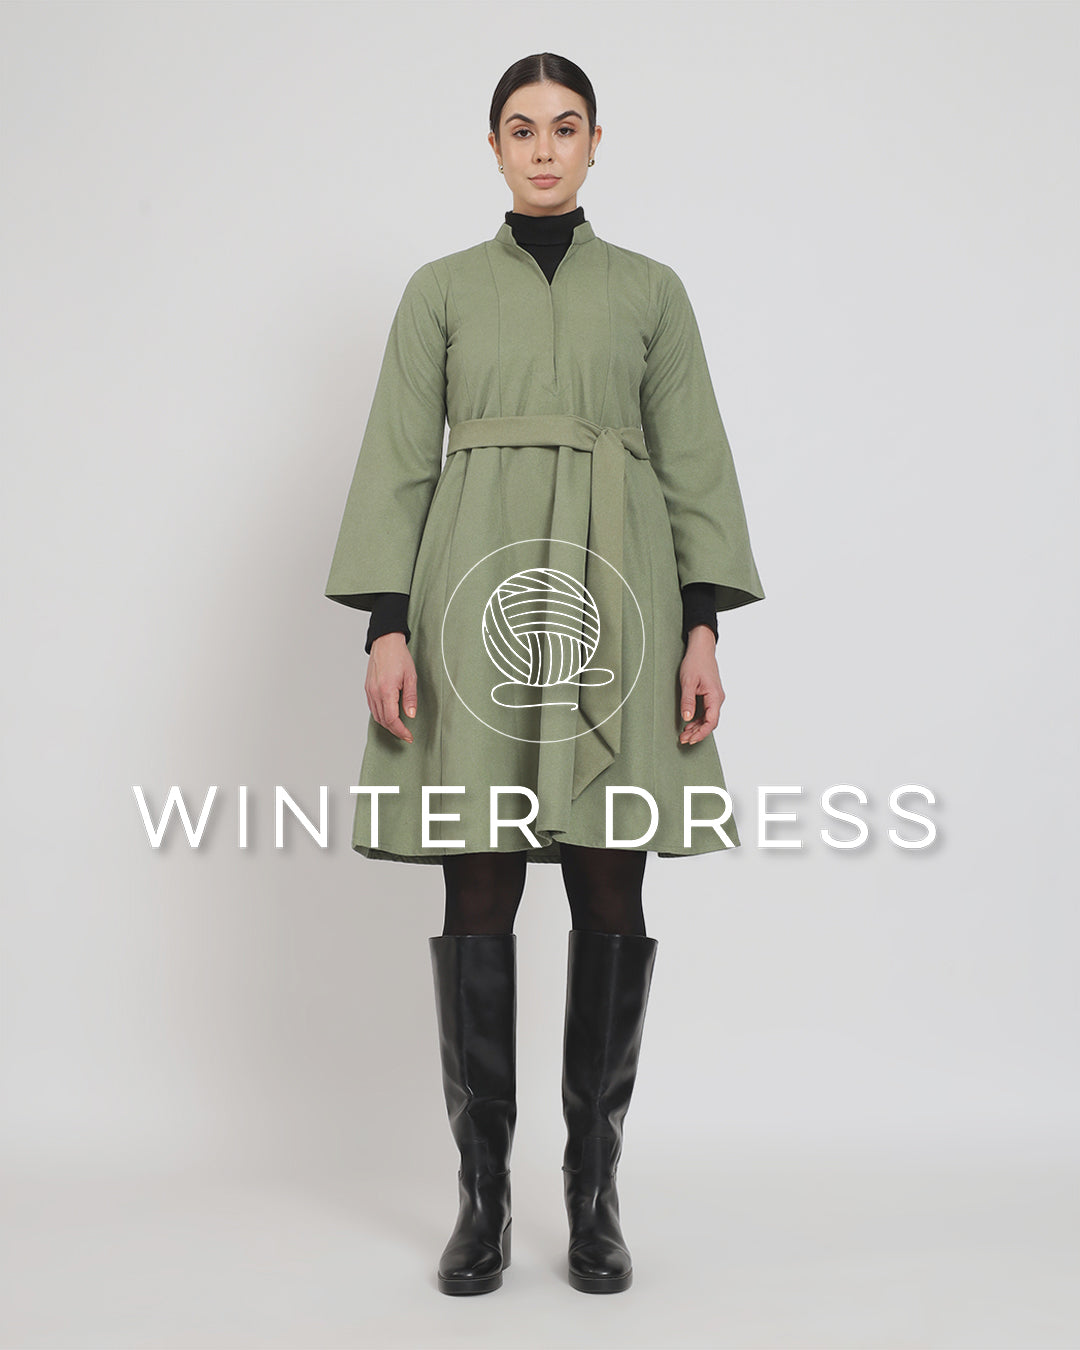 Pistachio Green Flared Solid Woolen Dress